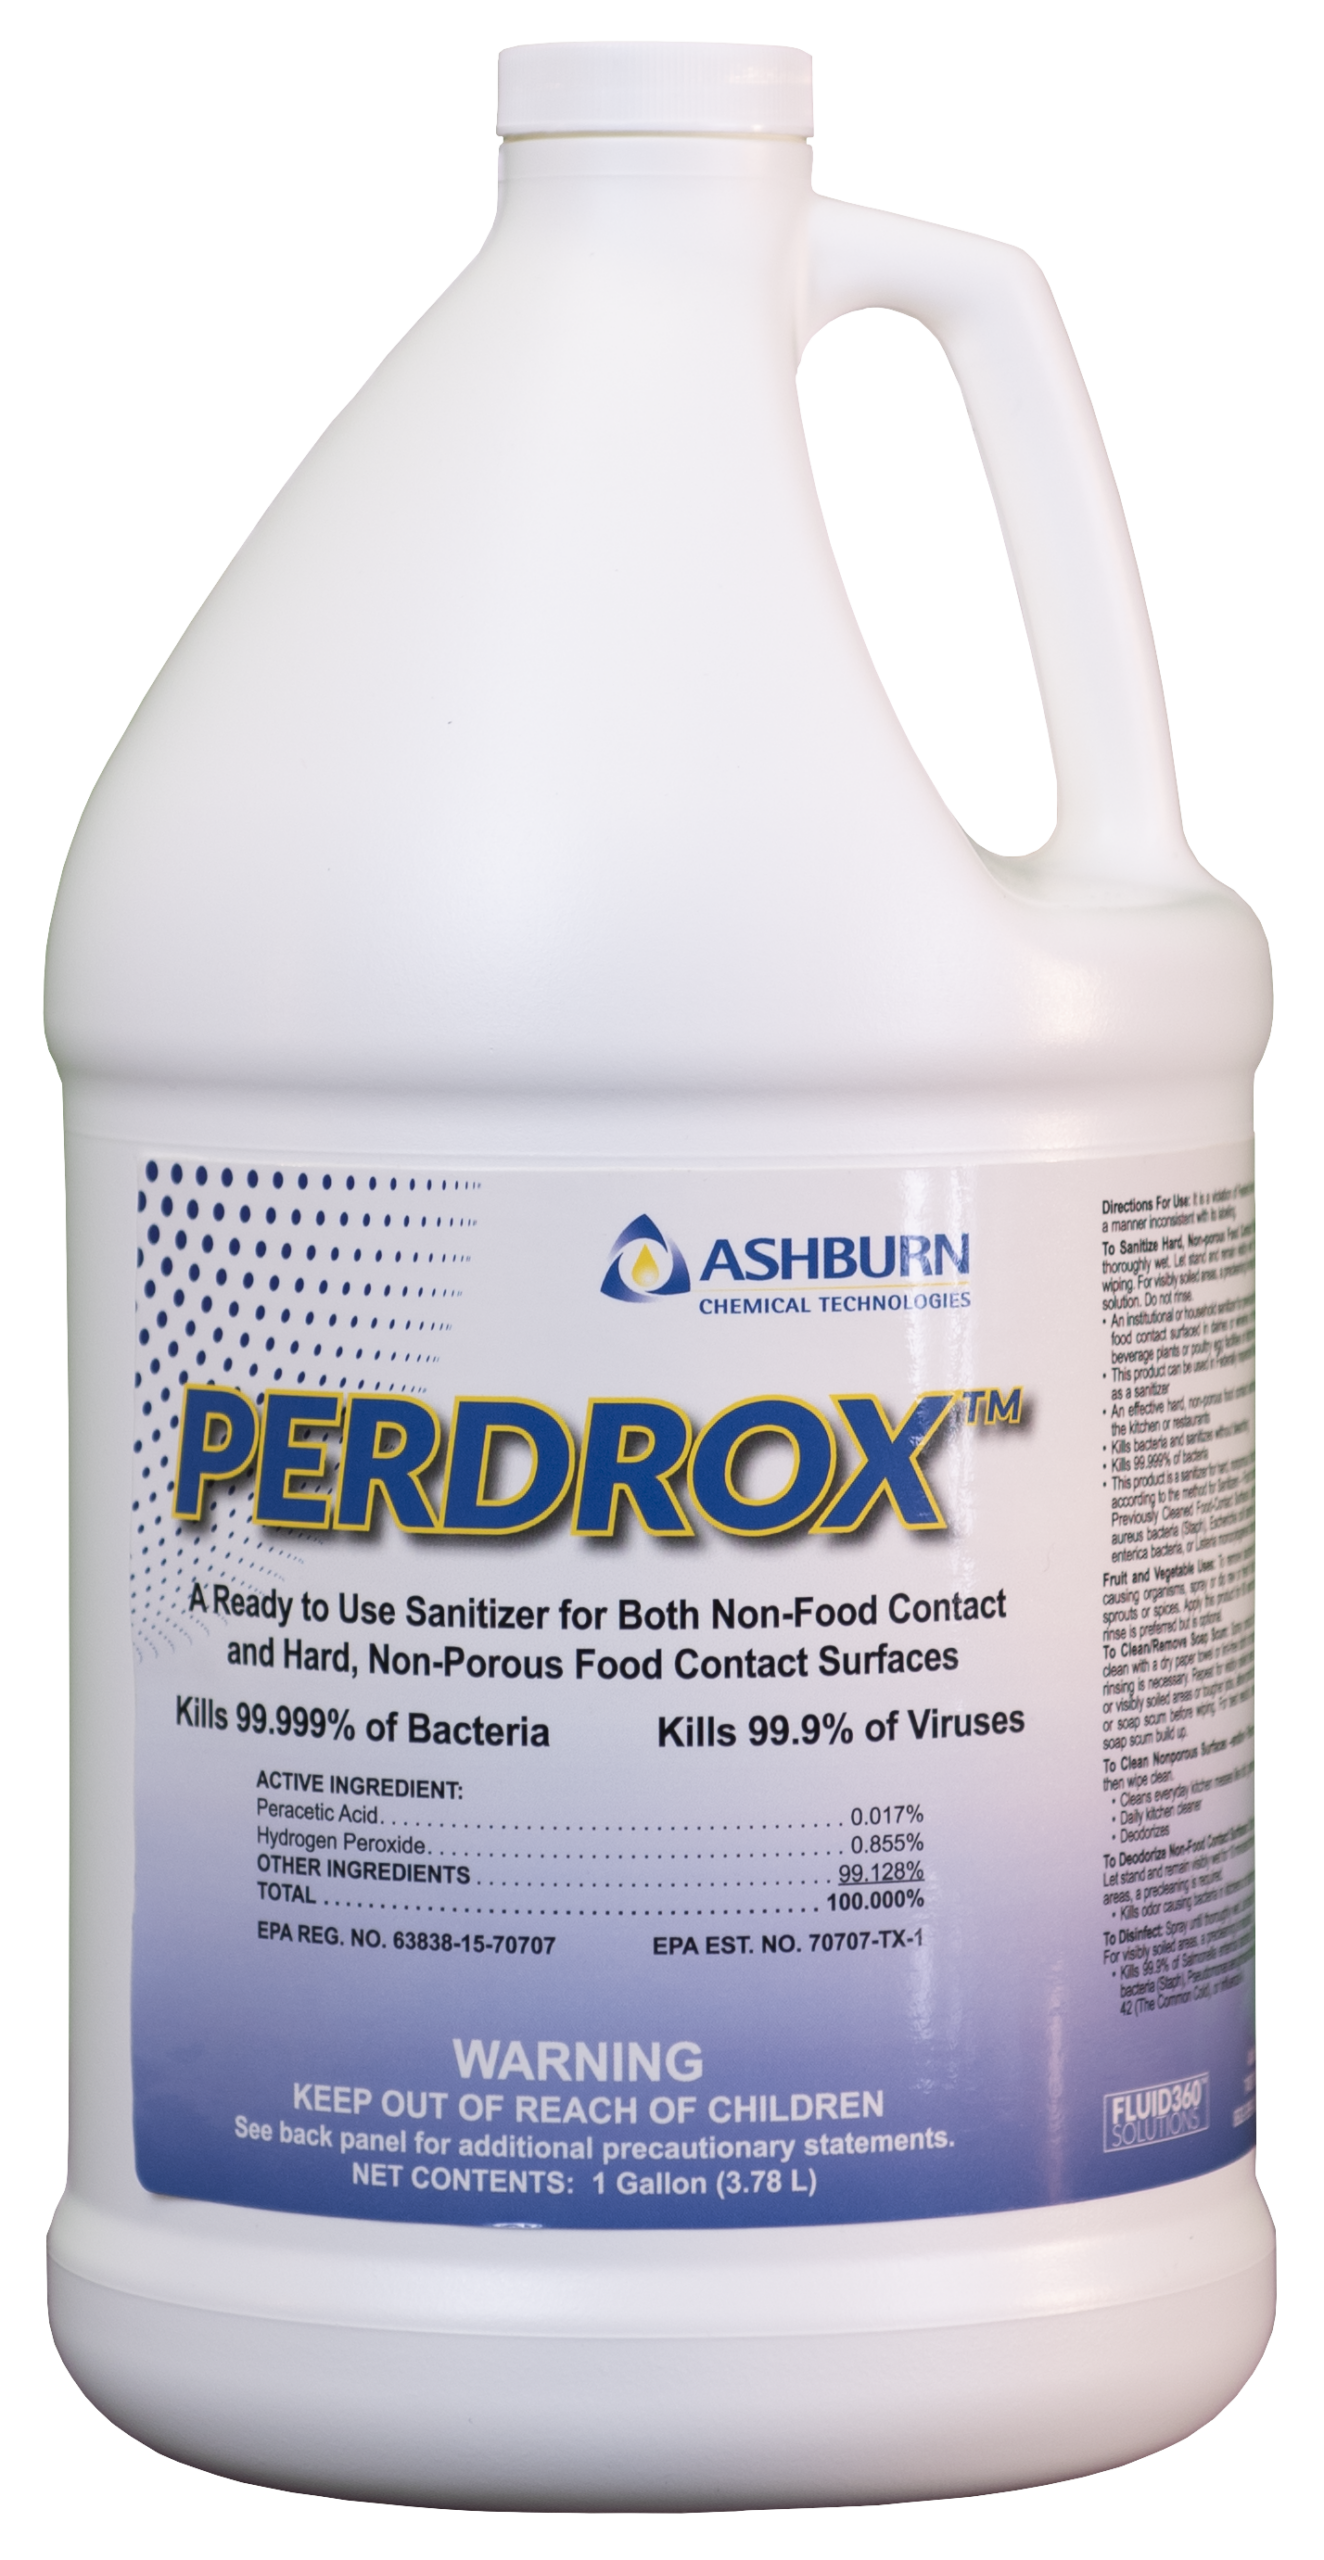 Perdrox 1 gallon cutout